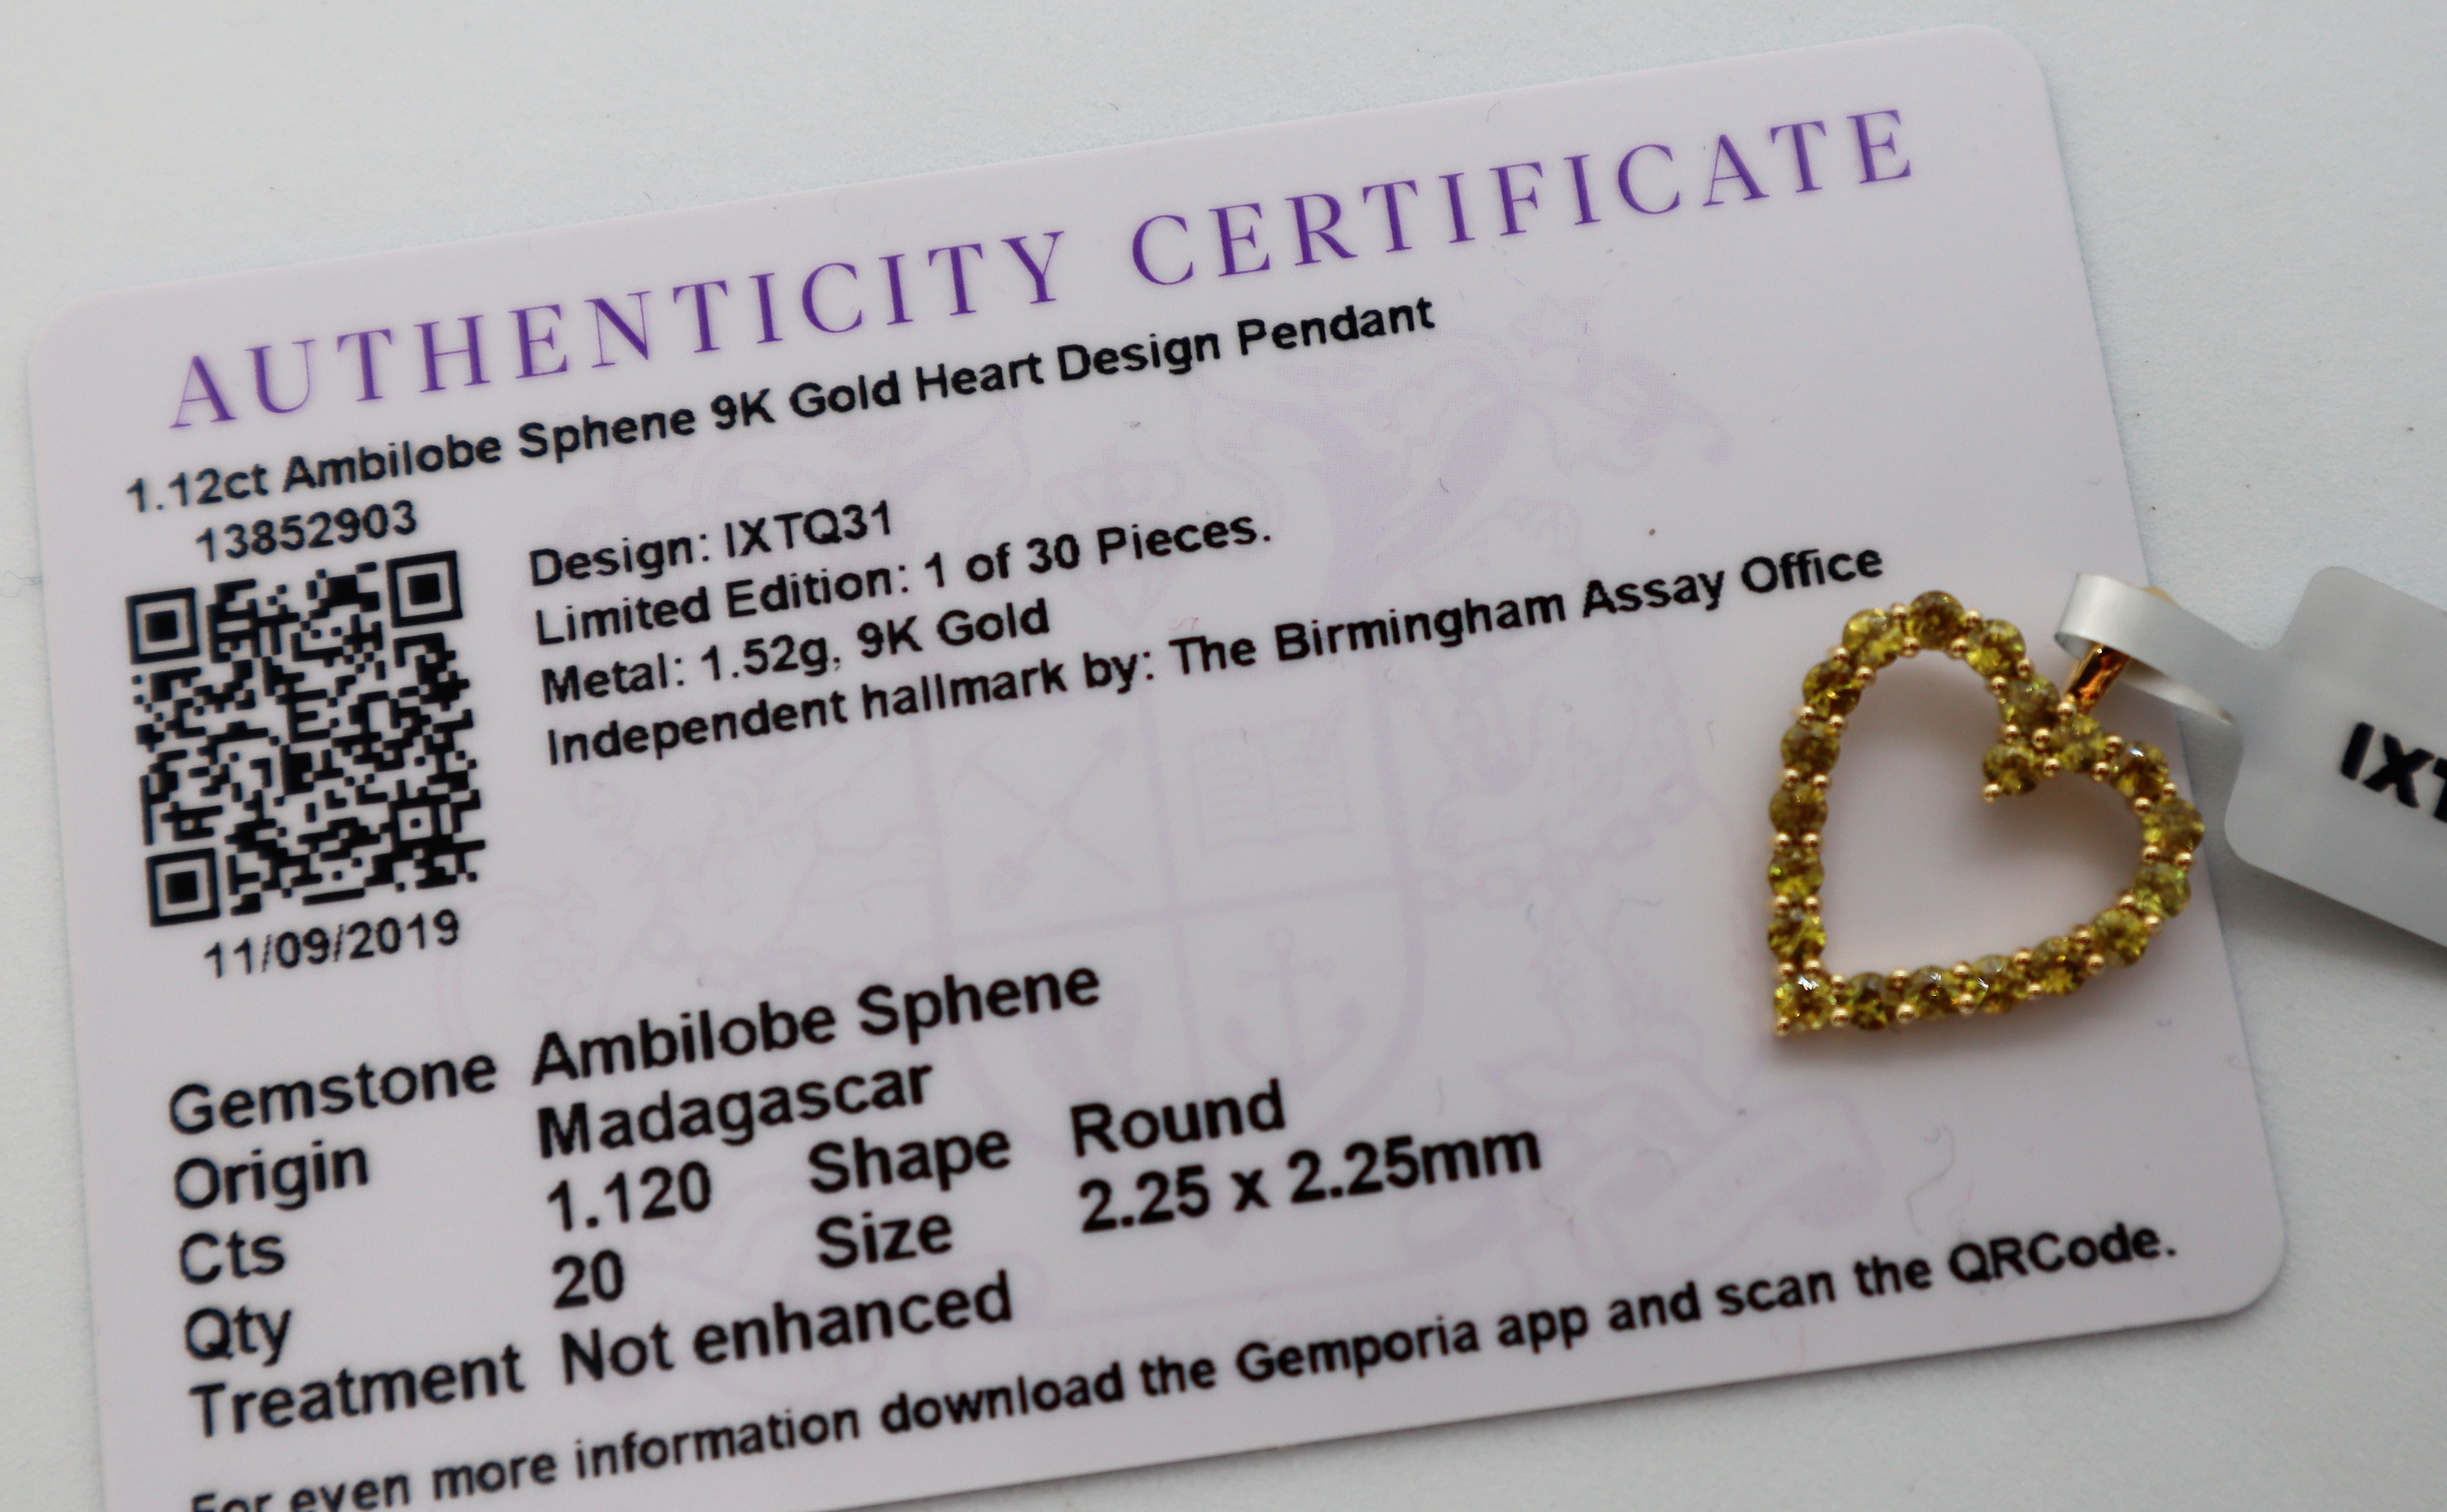 Gemporia - An ambilobe sphene 9k gold heart design pendant, set with twenty ambilobe sphene, - Image 4 of 4